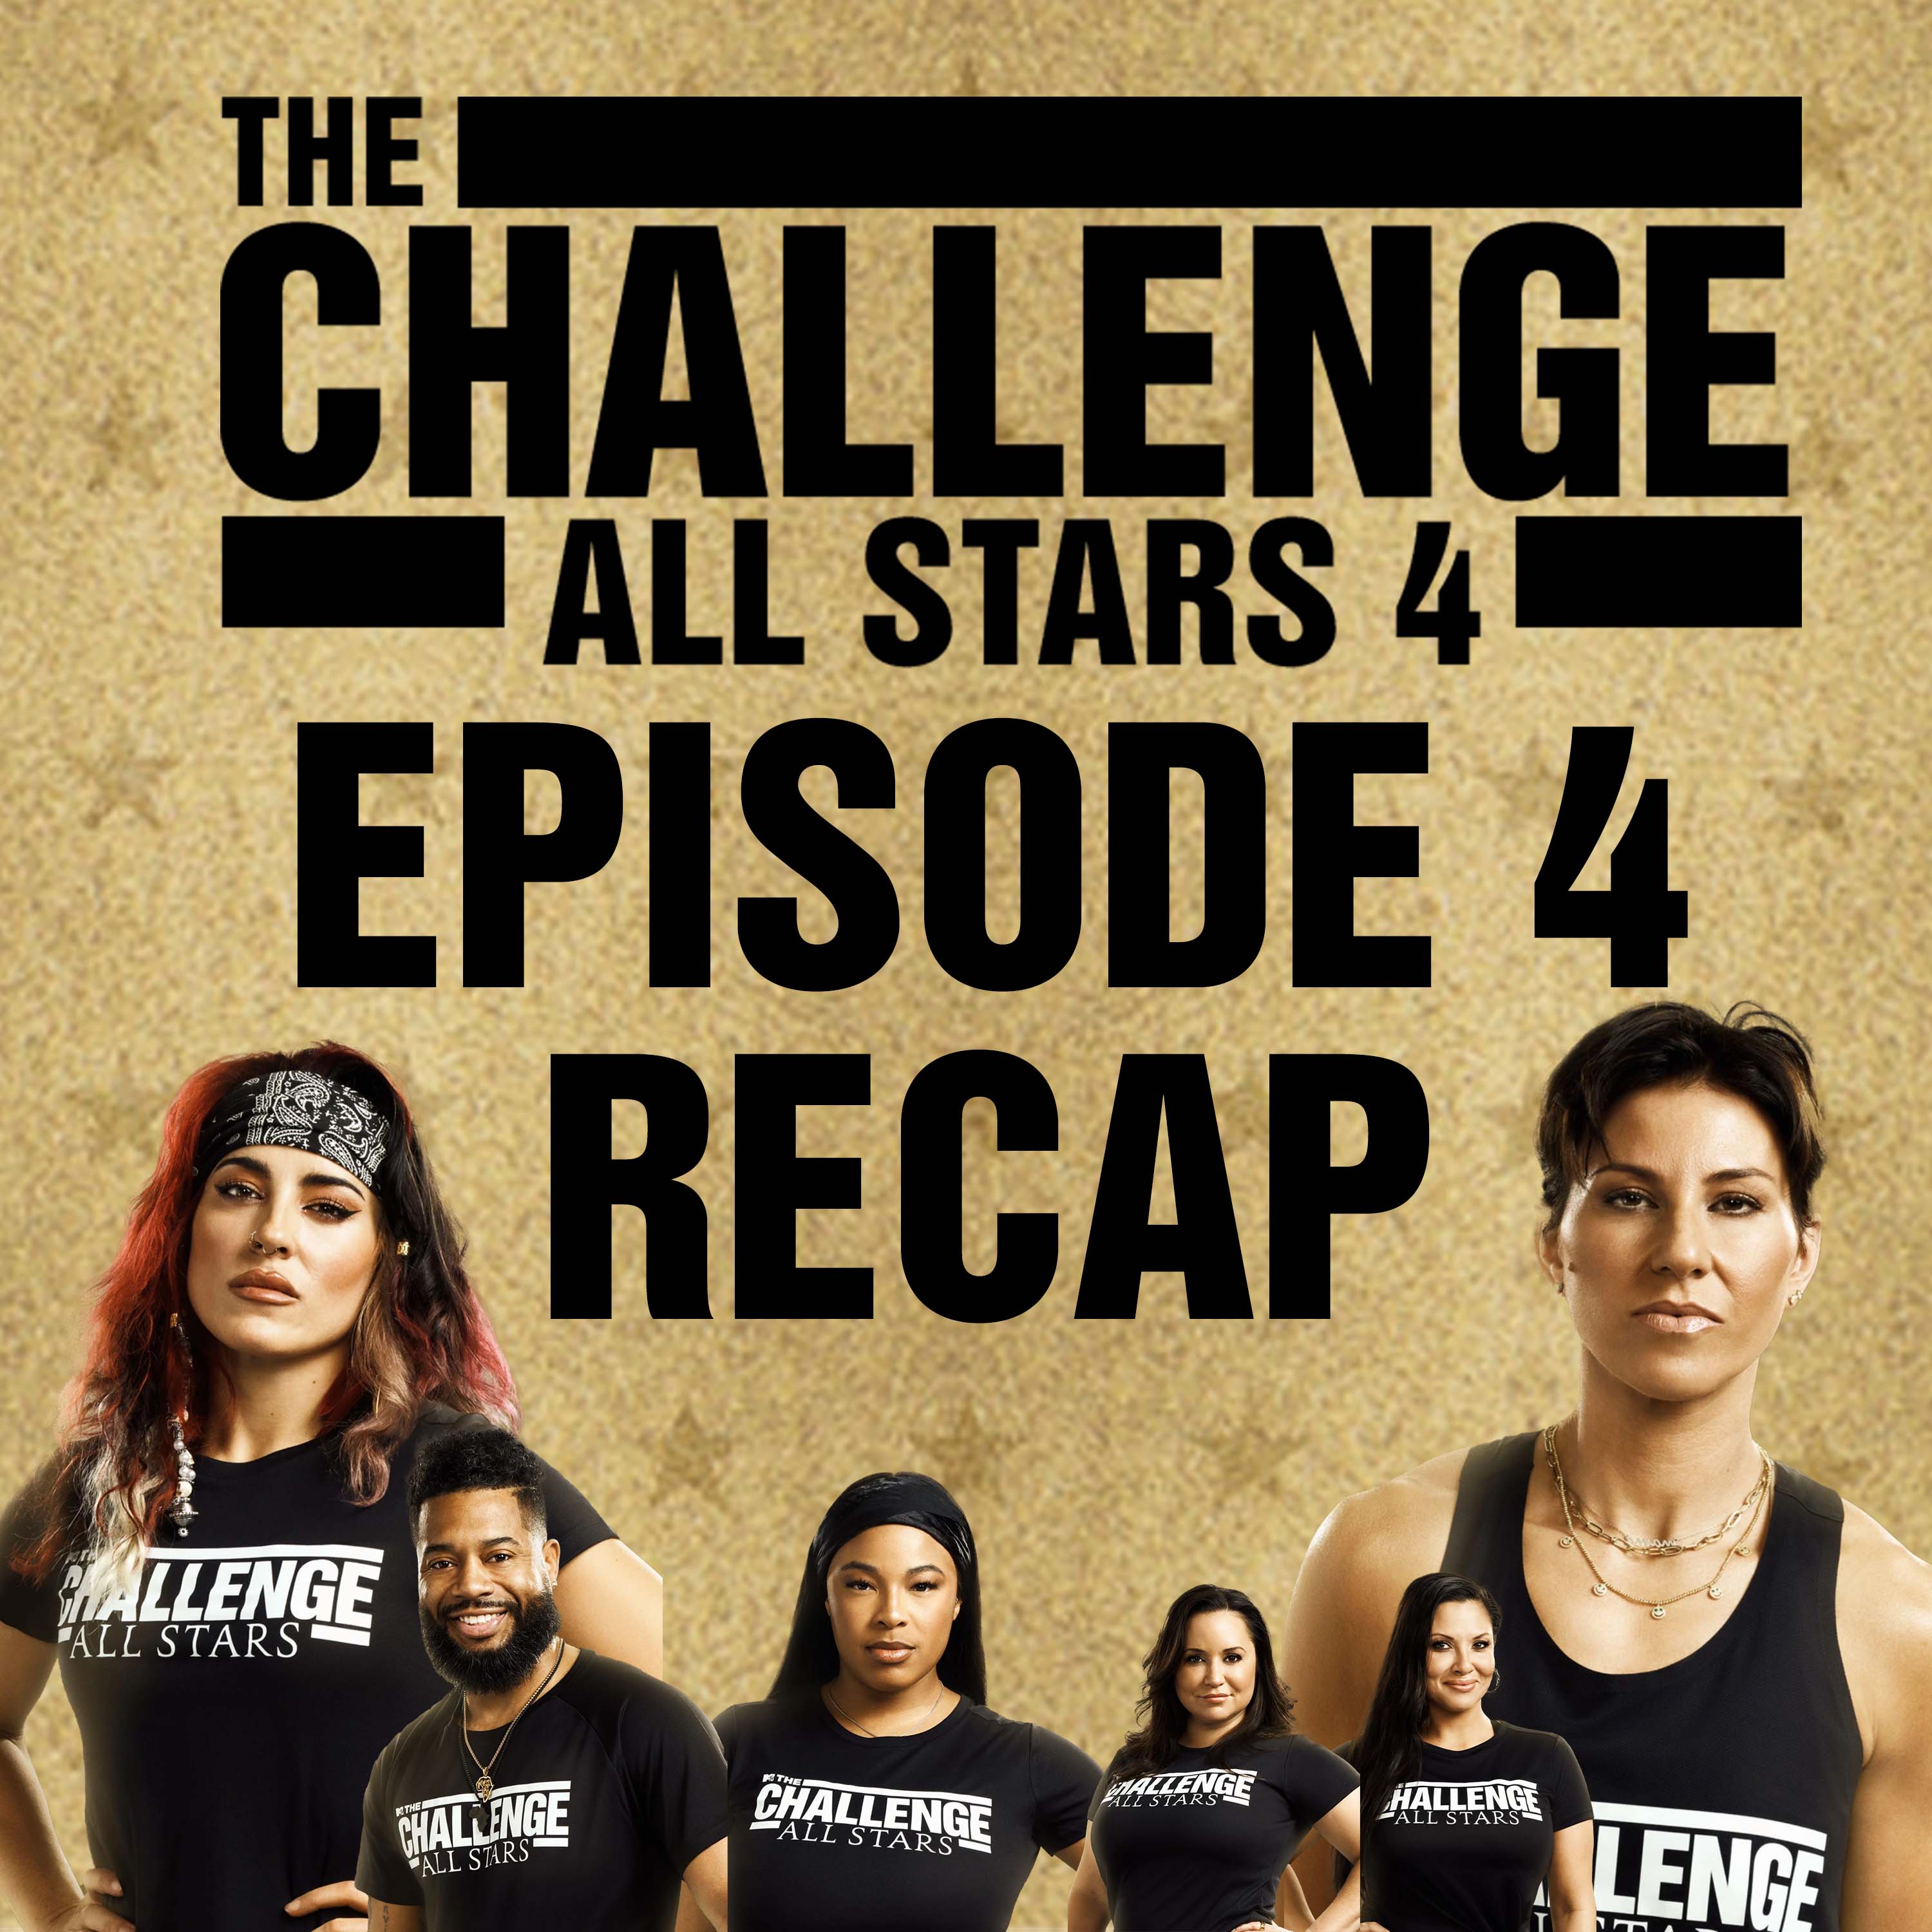 All Stars 4 Episode 4 Recap